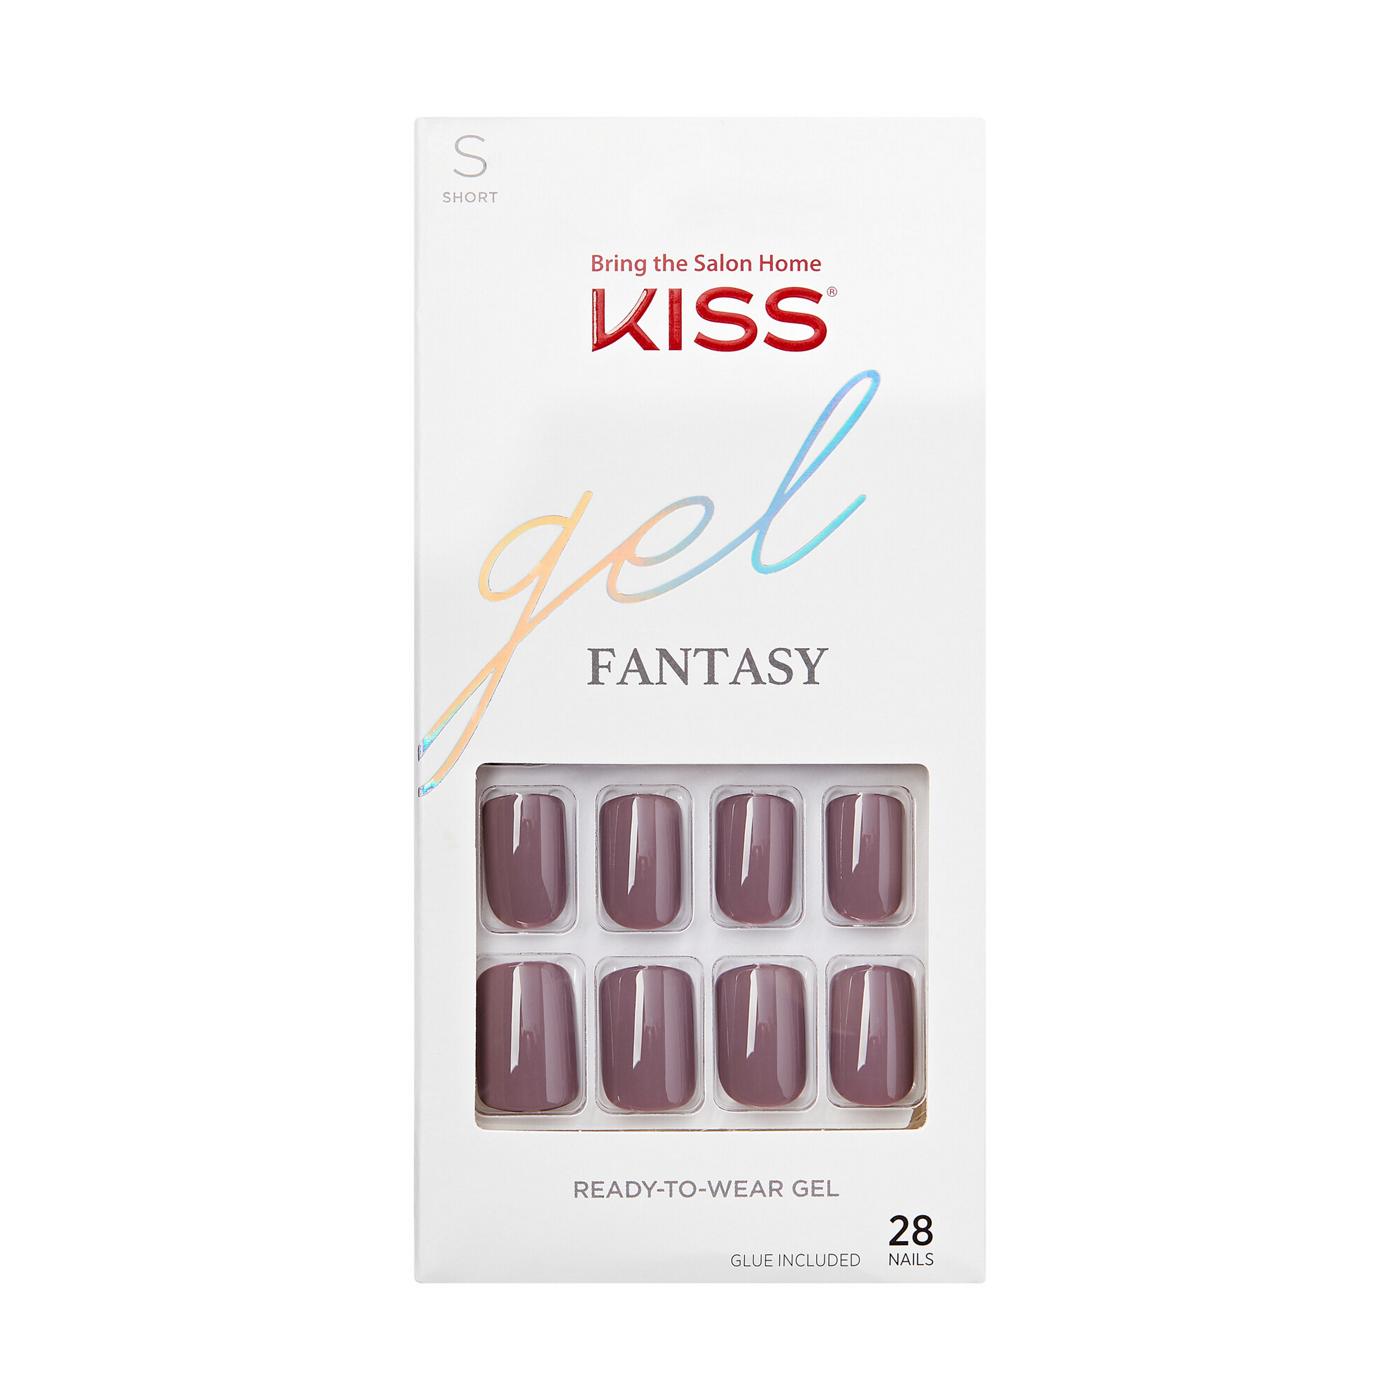 KISS Gel Fantasy Nails - Temporary Feels; image 1 of 4